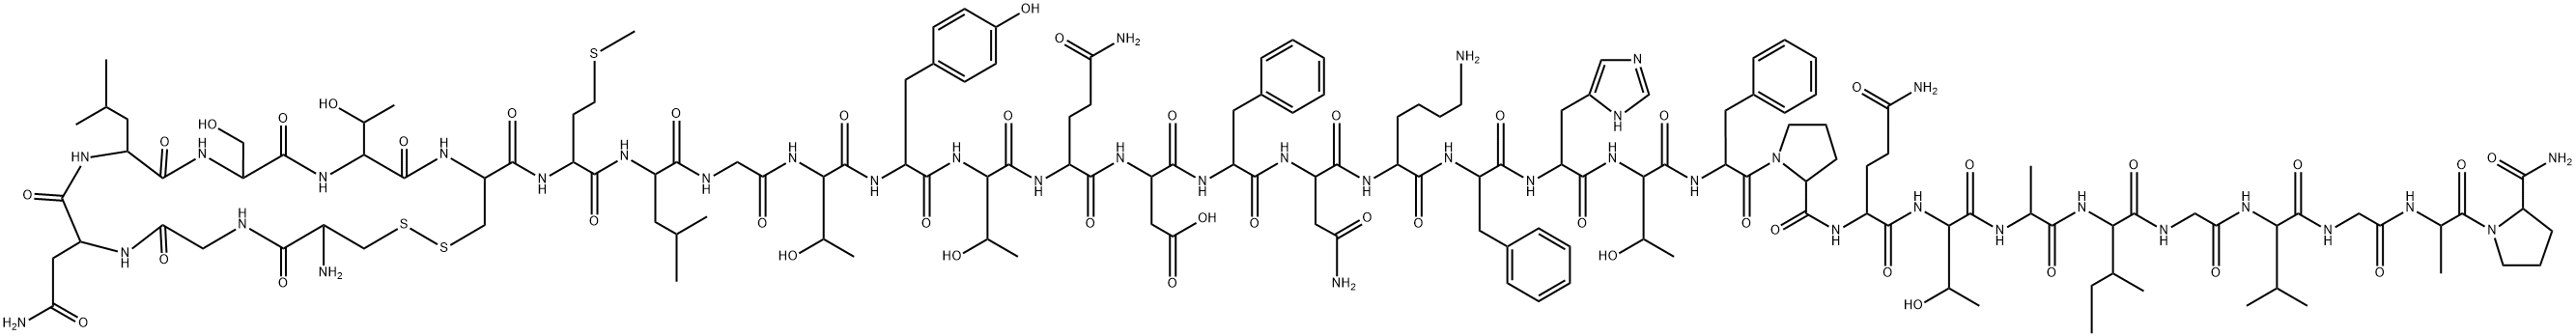 Calcitonin (human)  Structure